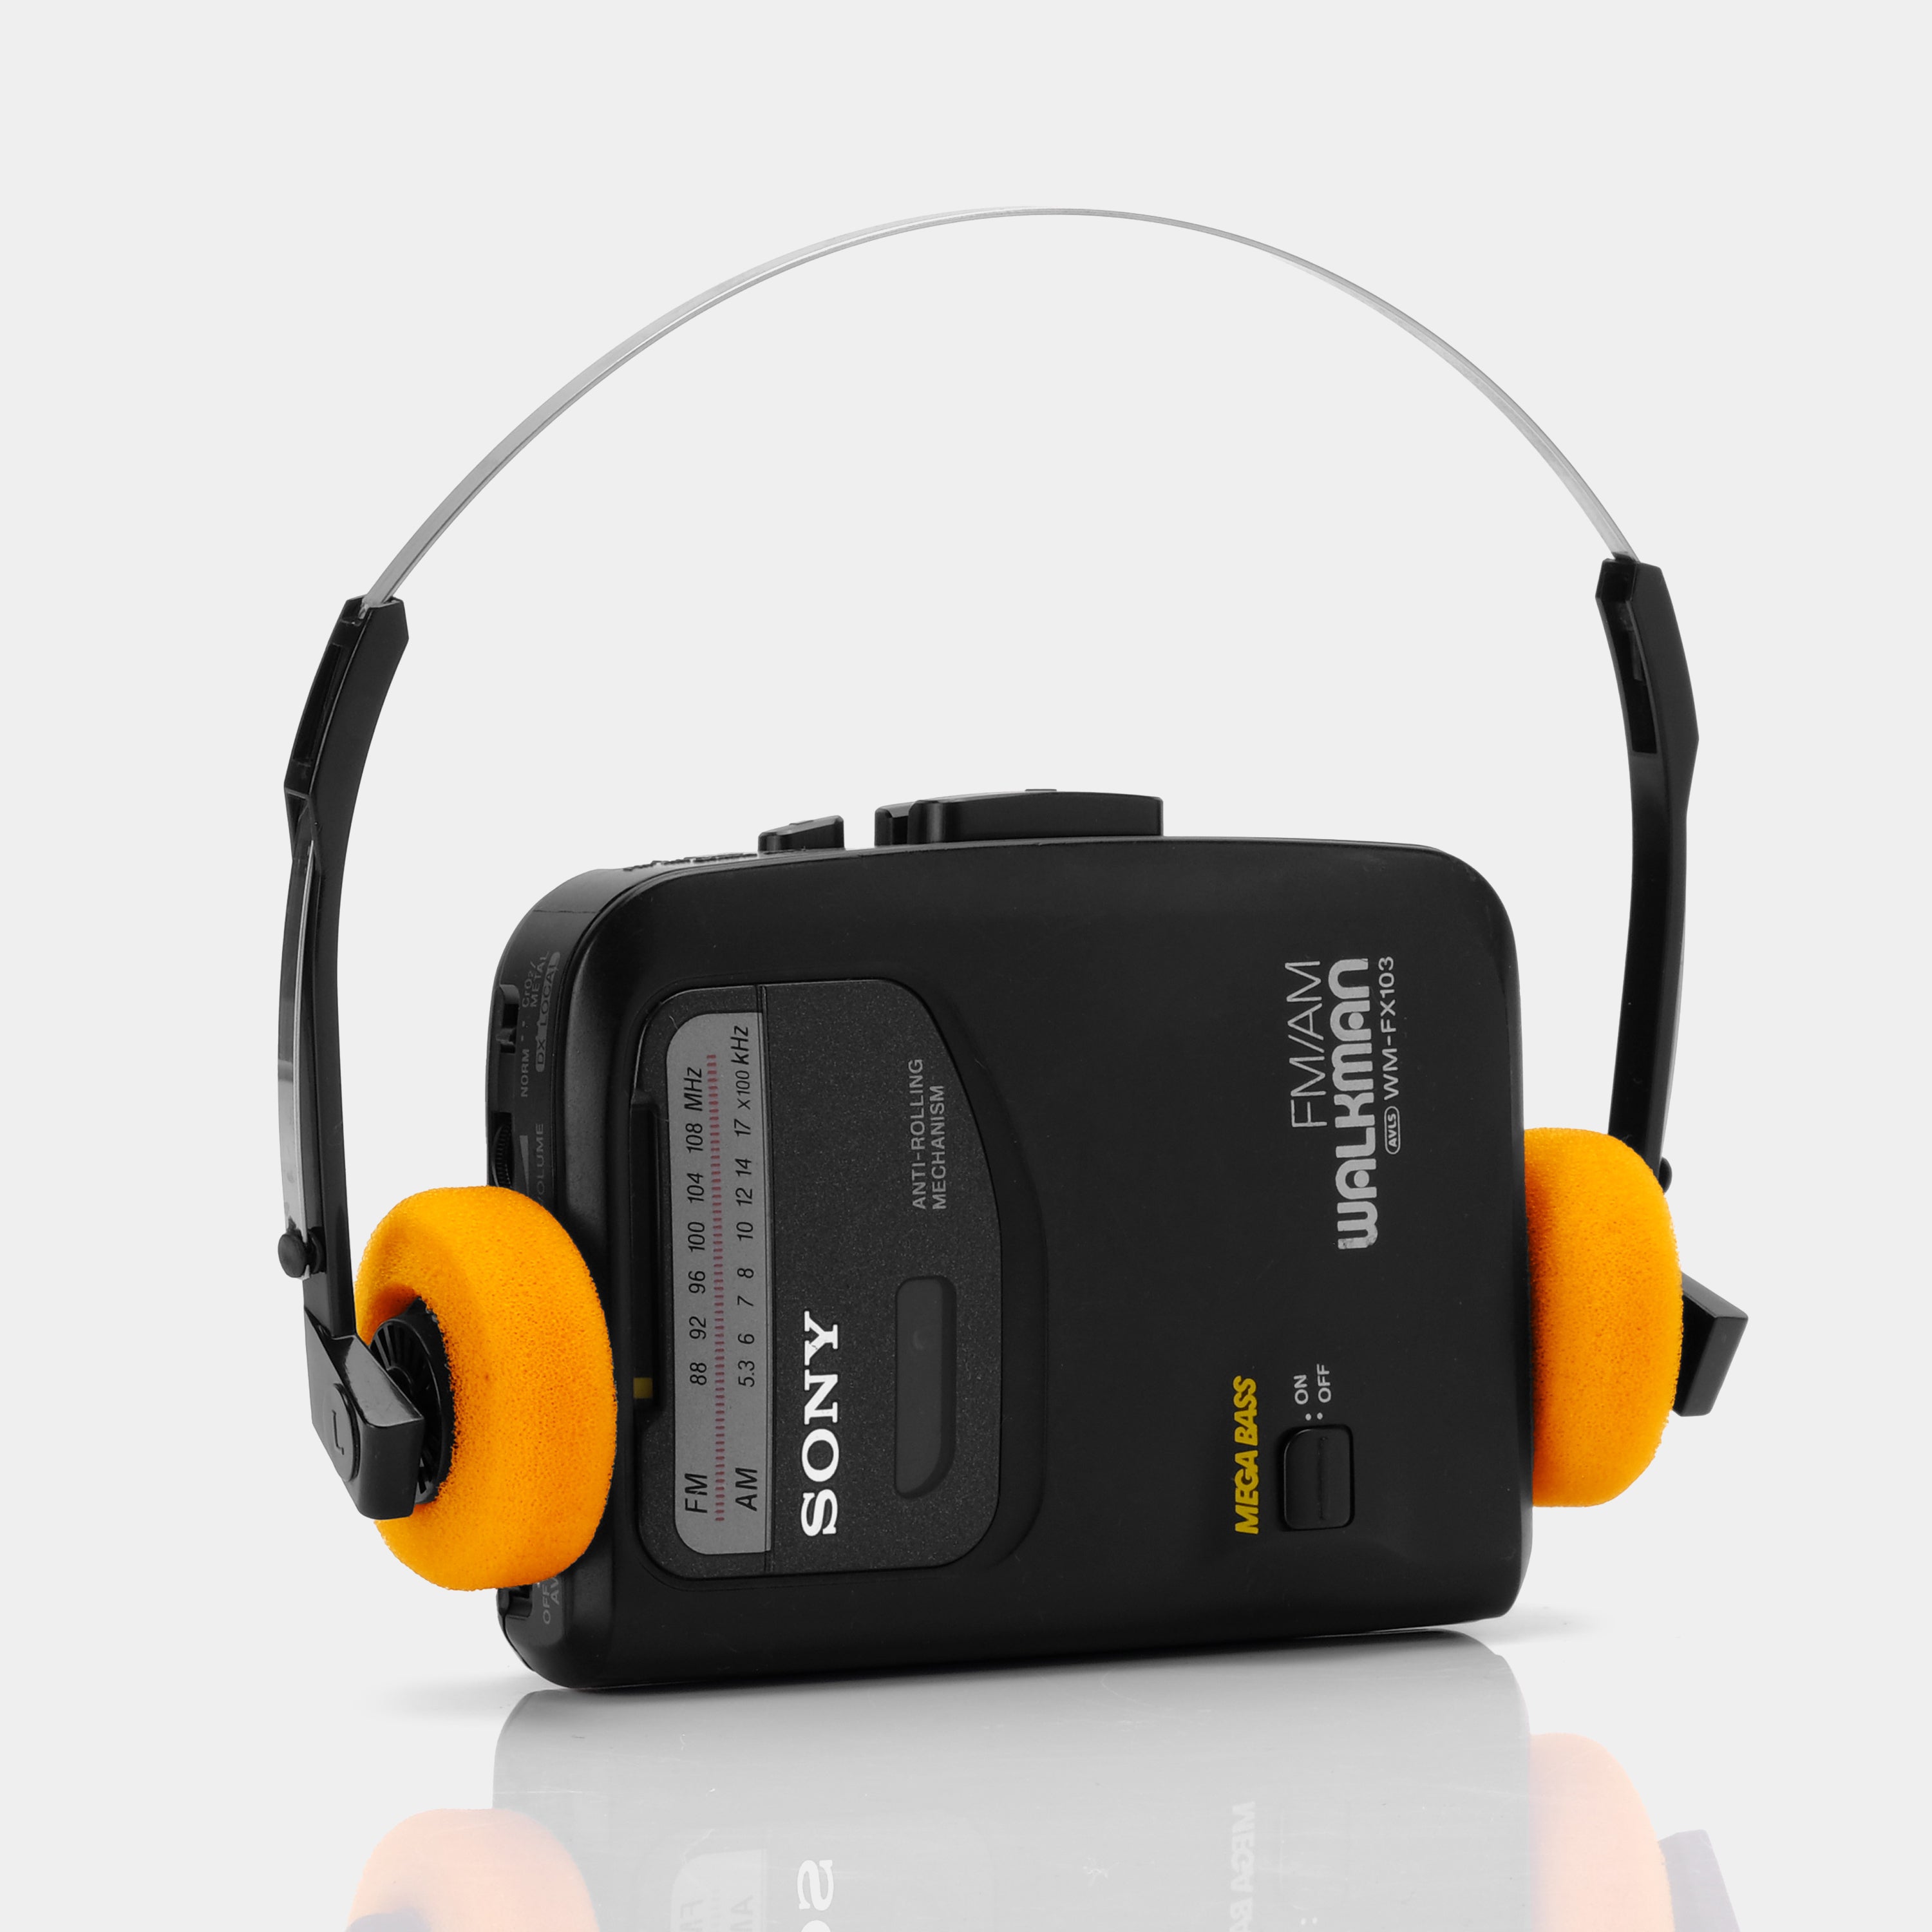 Sony Walkman WM-FX103 AM/FM Portable Cassette Player (B-Grade)